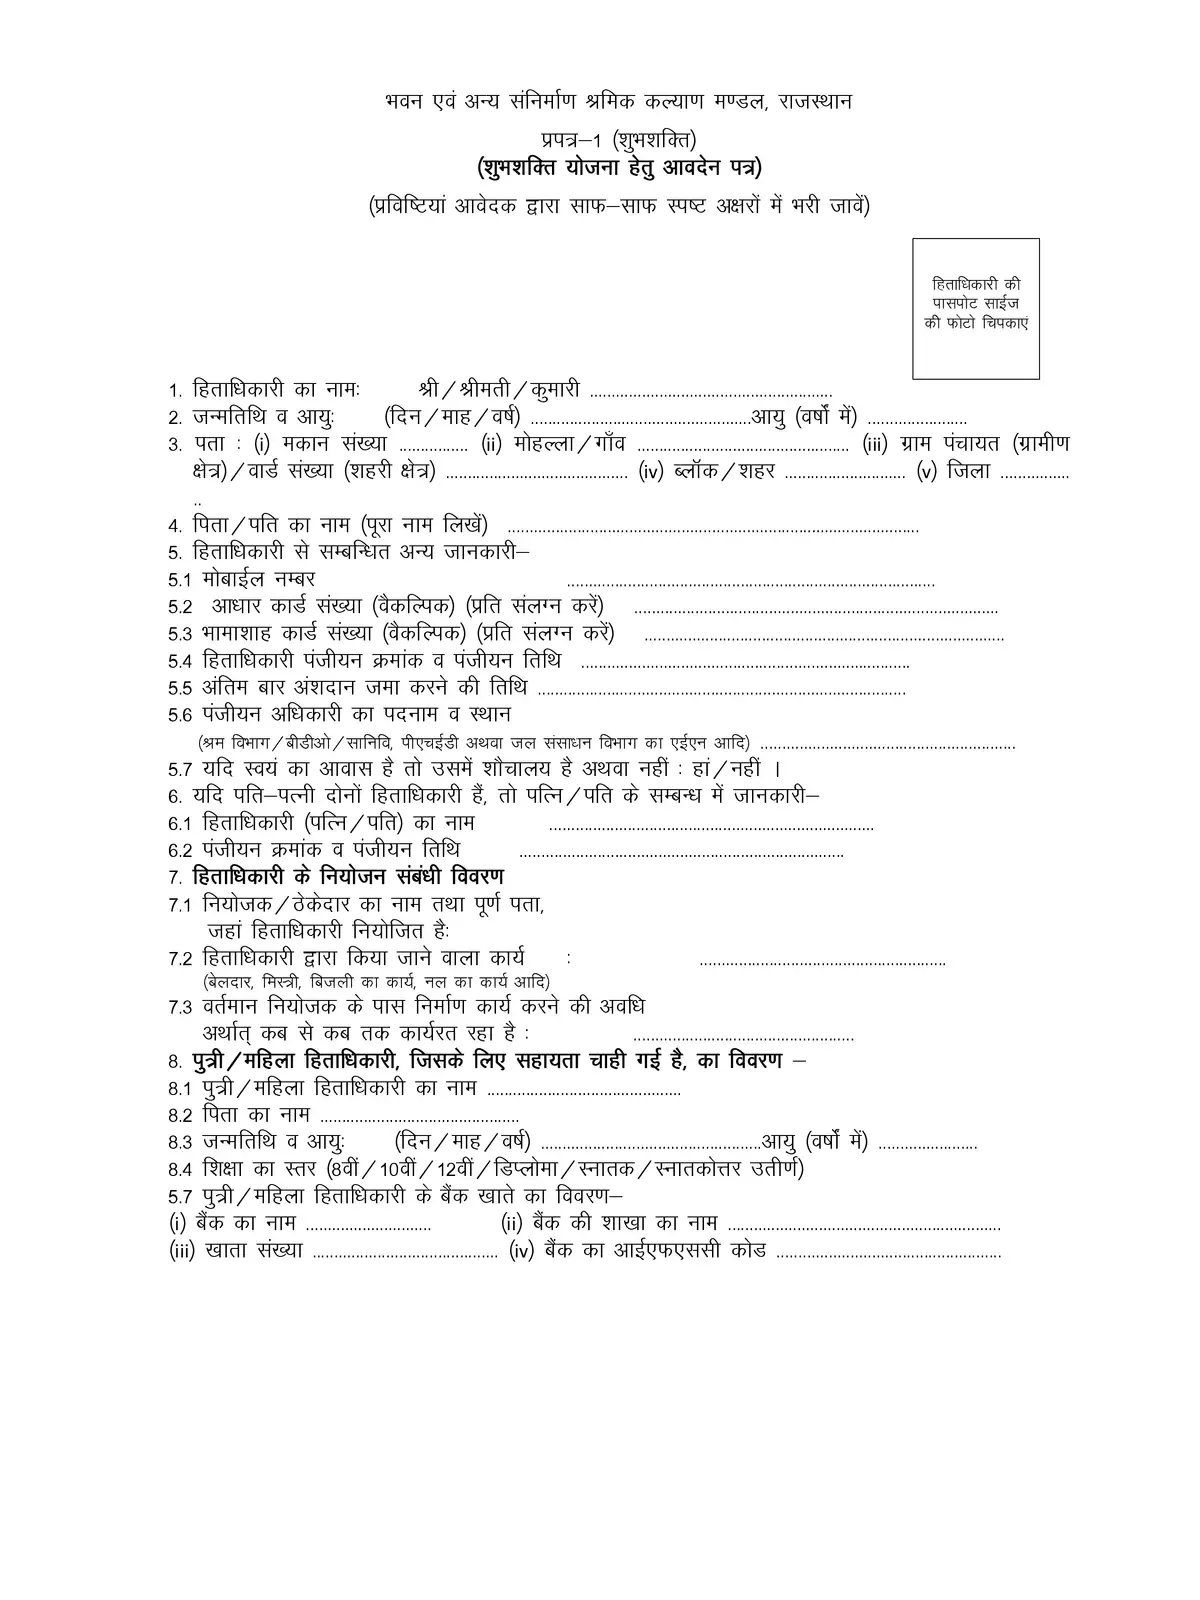 Shubh Shakti Yojana Application Form for Construction Workers